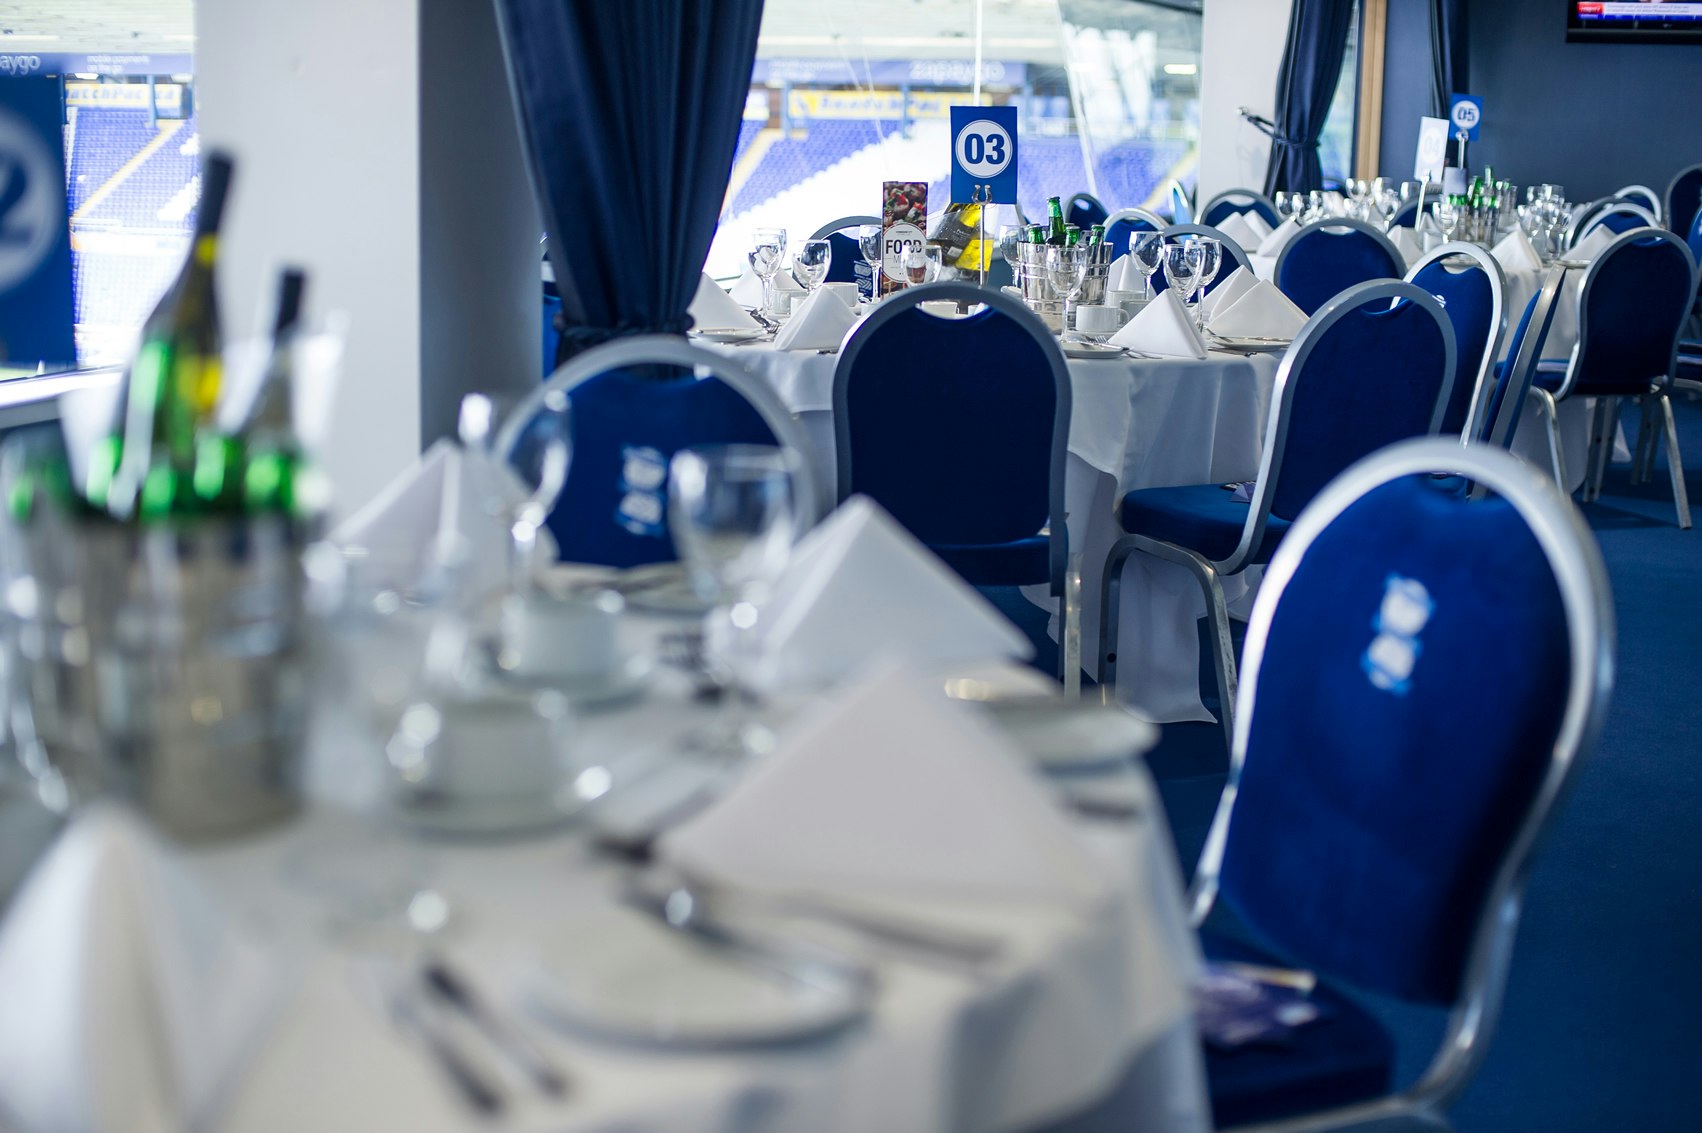 Private Dining Rooms Venues in Birmingham - Birmingham City Football Club